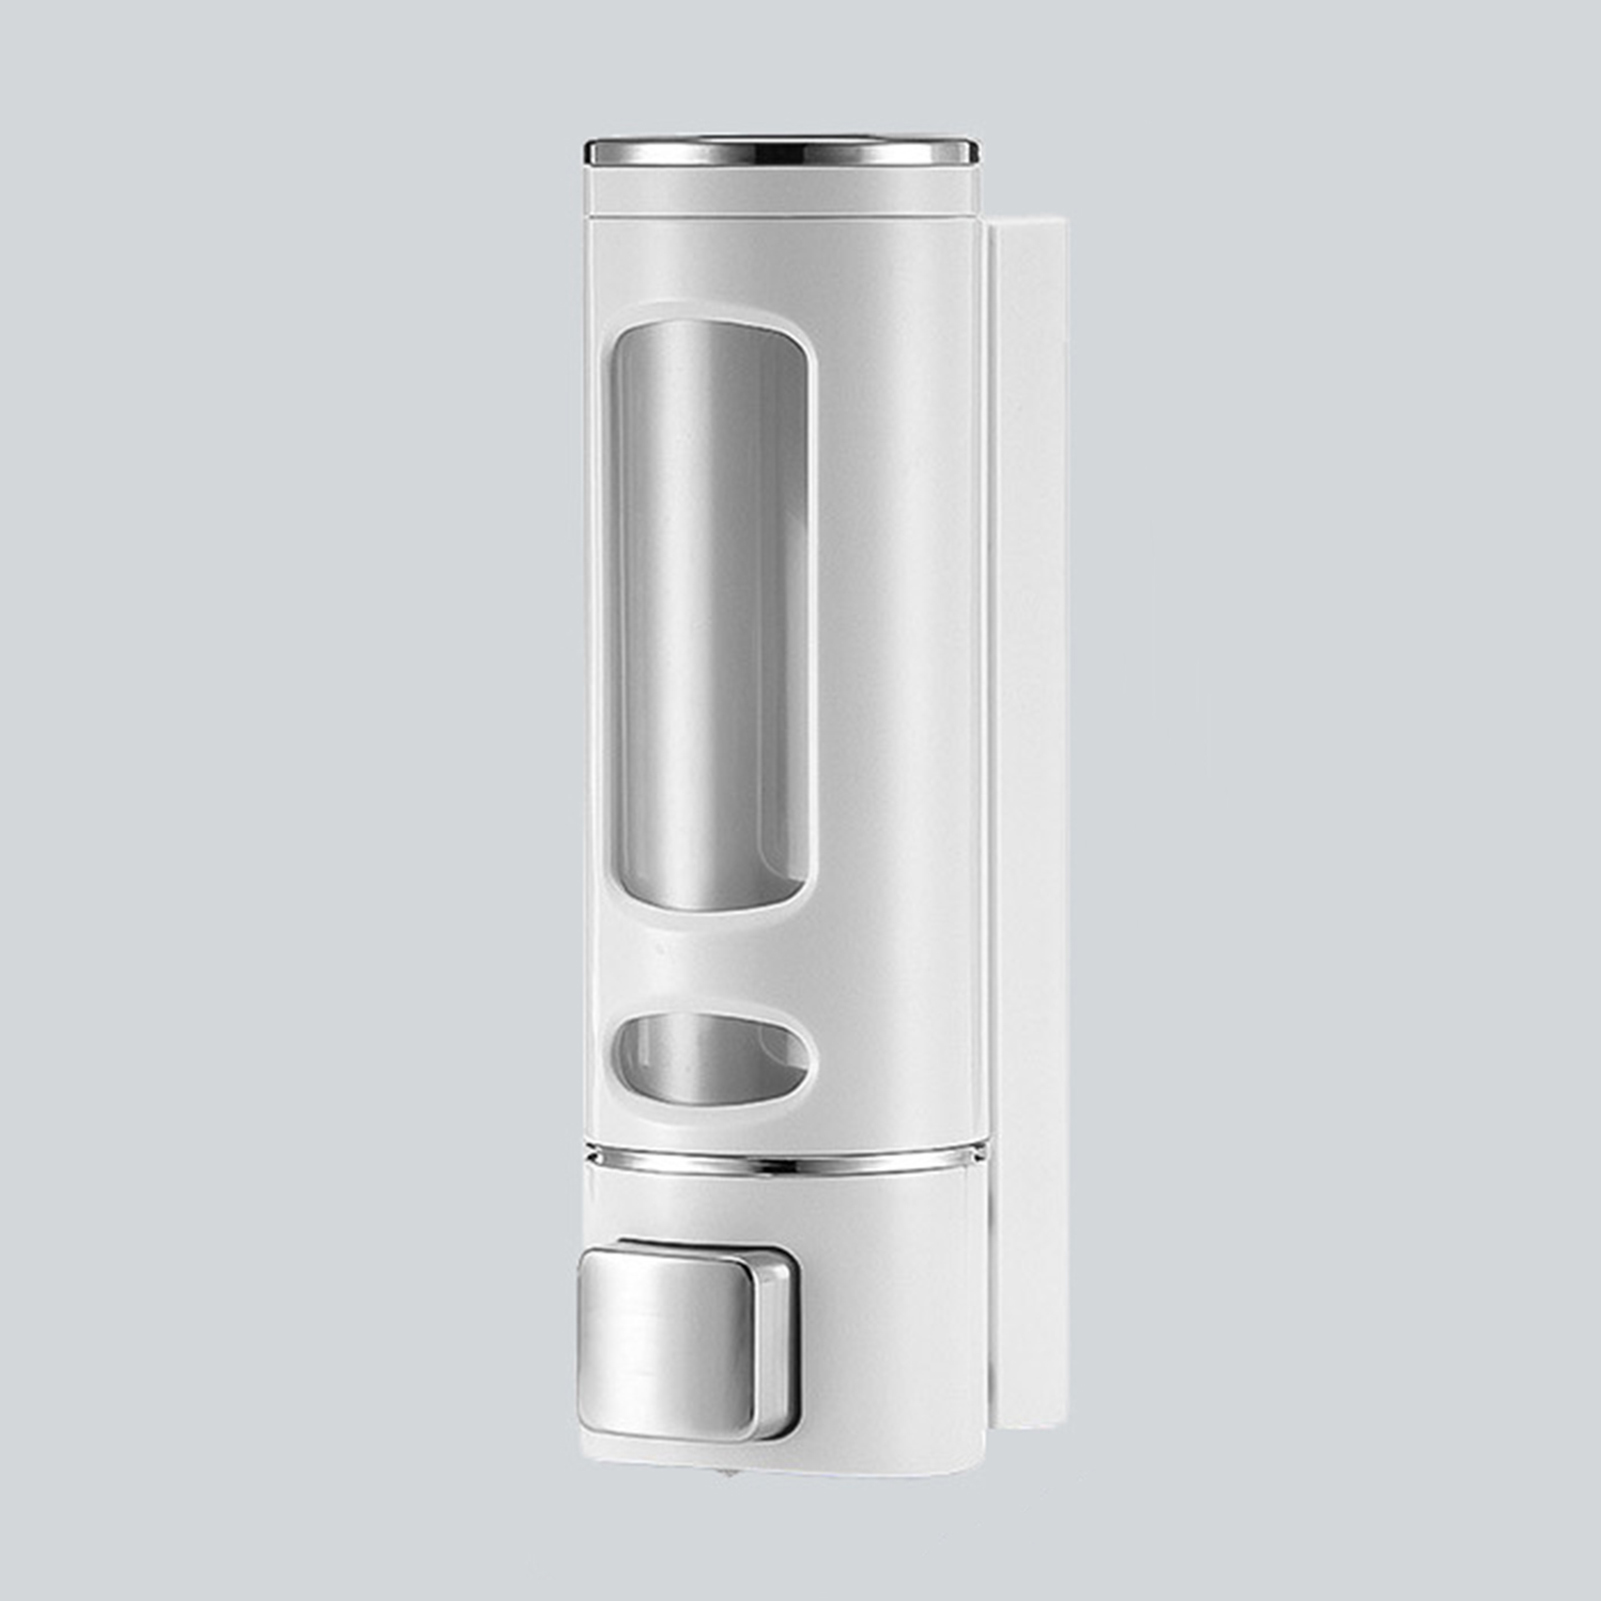 Aquaterior Liquid Soap Dispenser for Kitchen Sink 400ml –